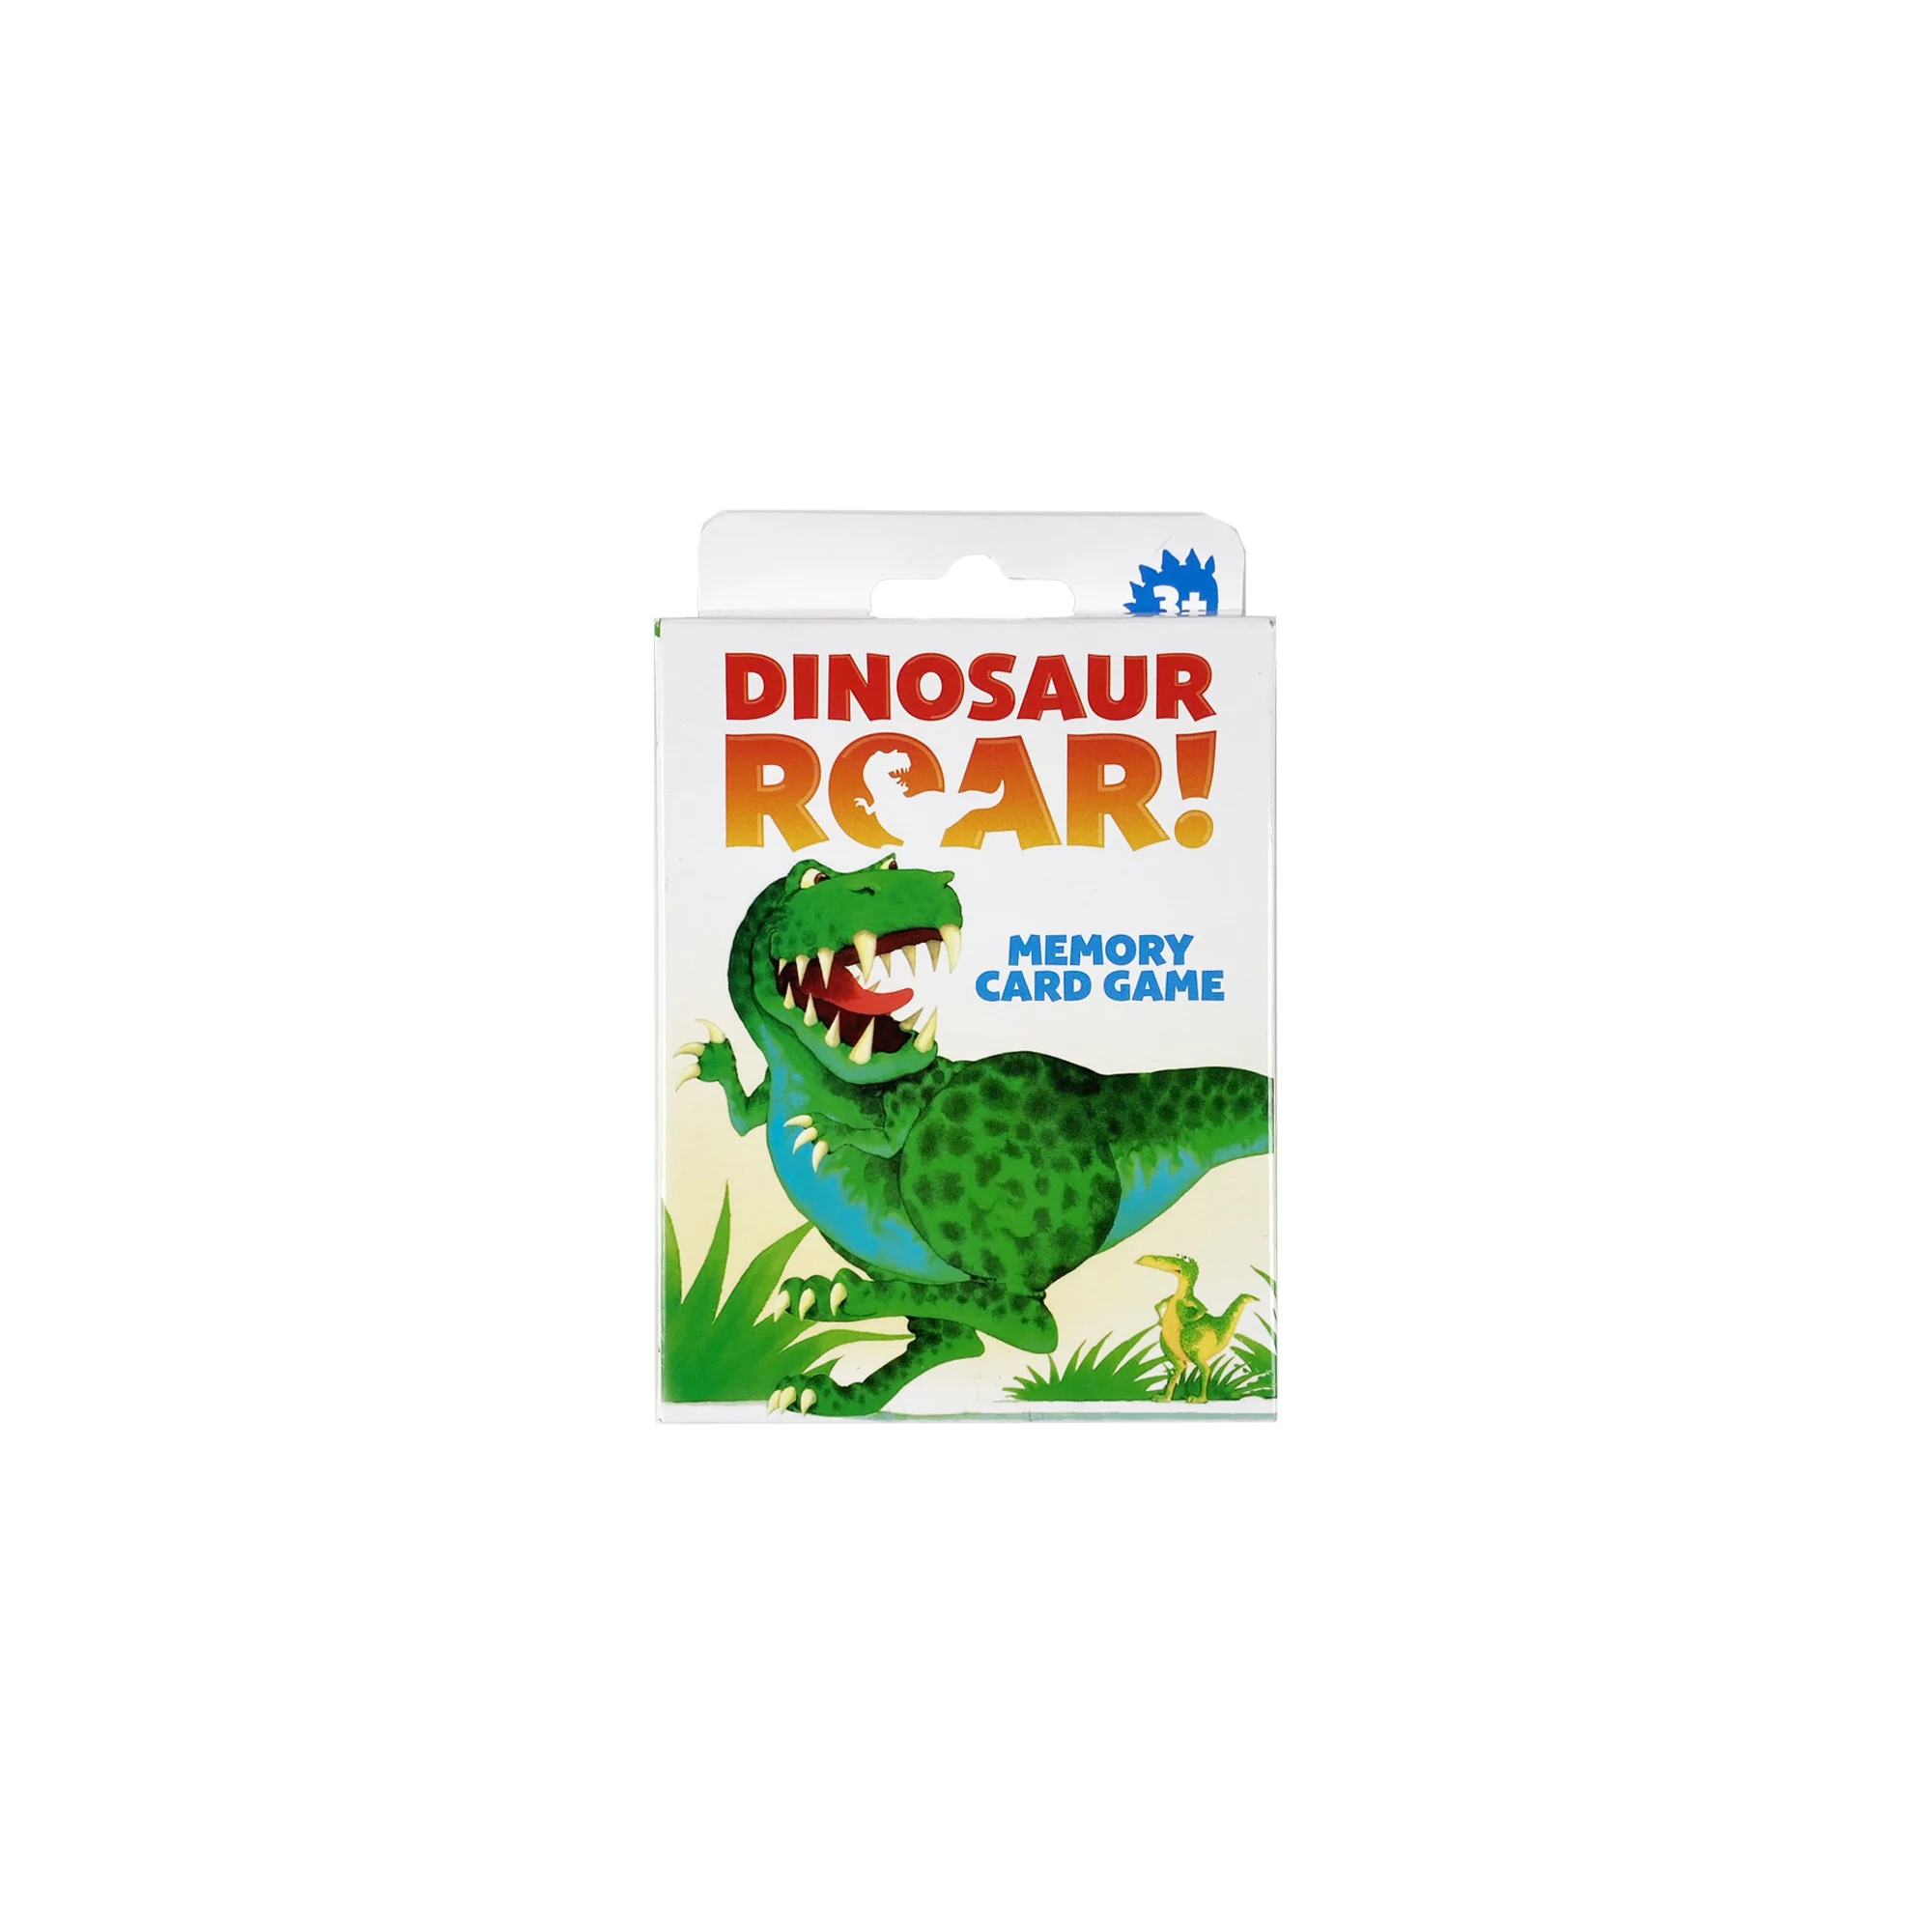 The World of Dinosaur Roar! Memory Card Game